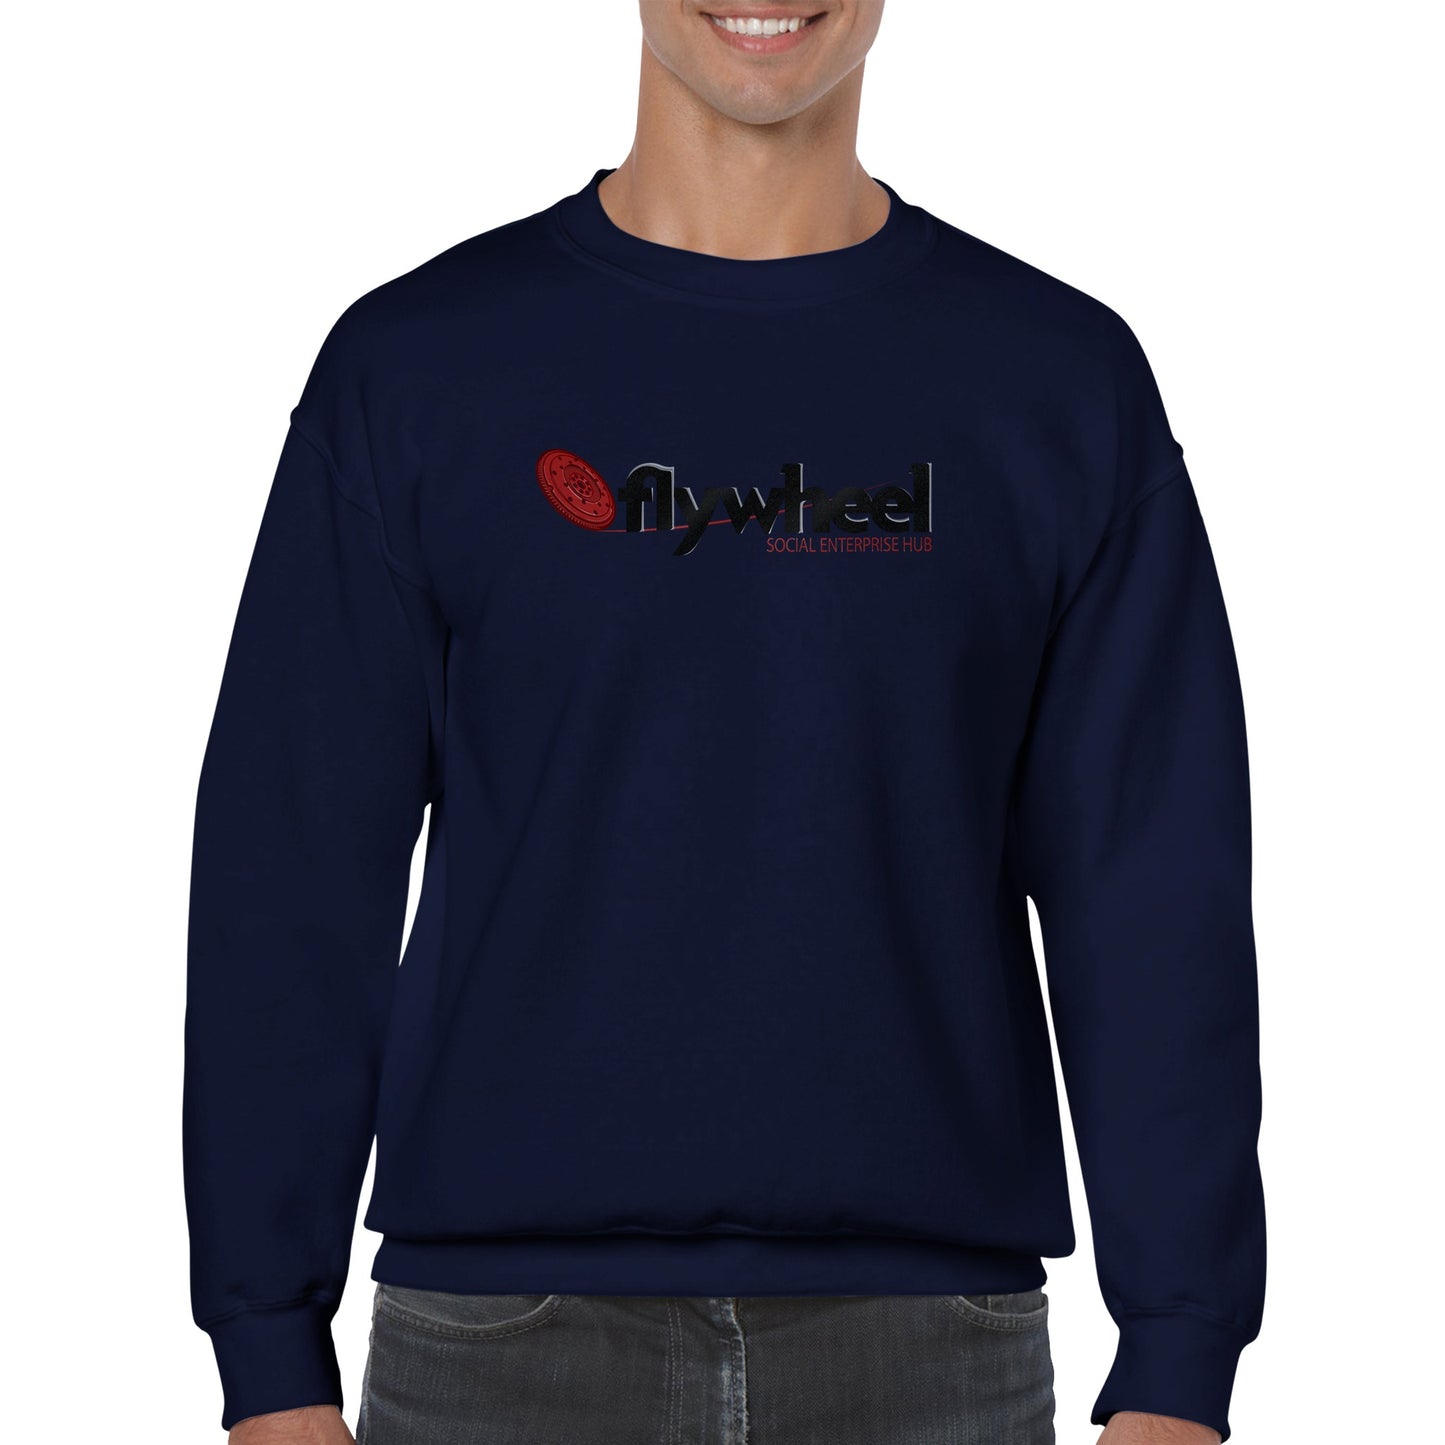 Flywheel Social Enterprise Hub - Classic Unisex Crewneck Sweatshirt